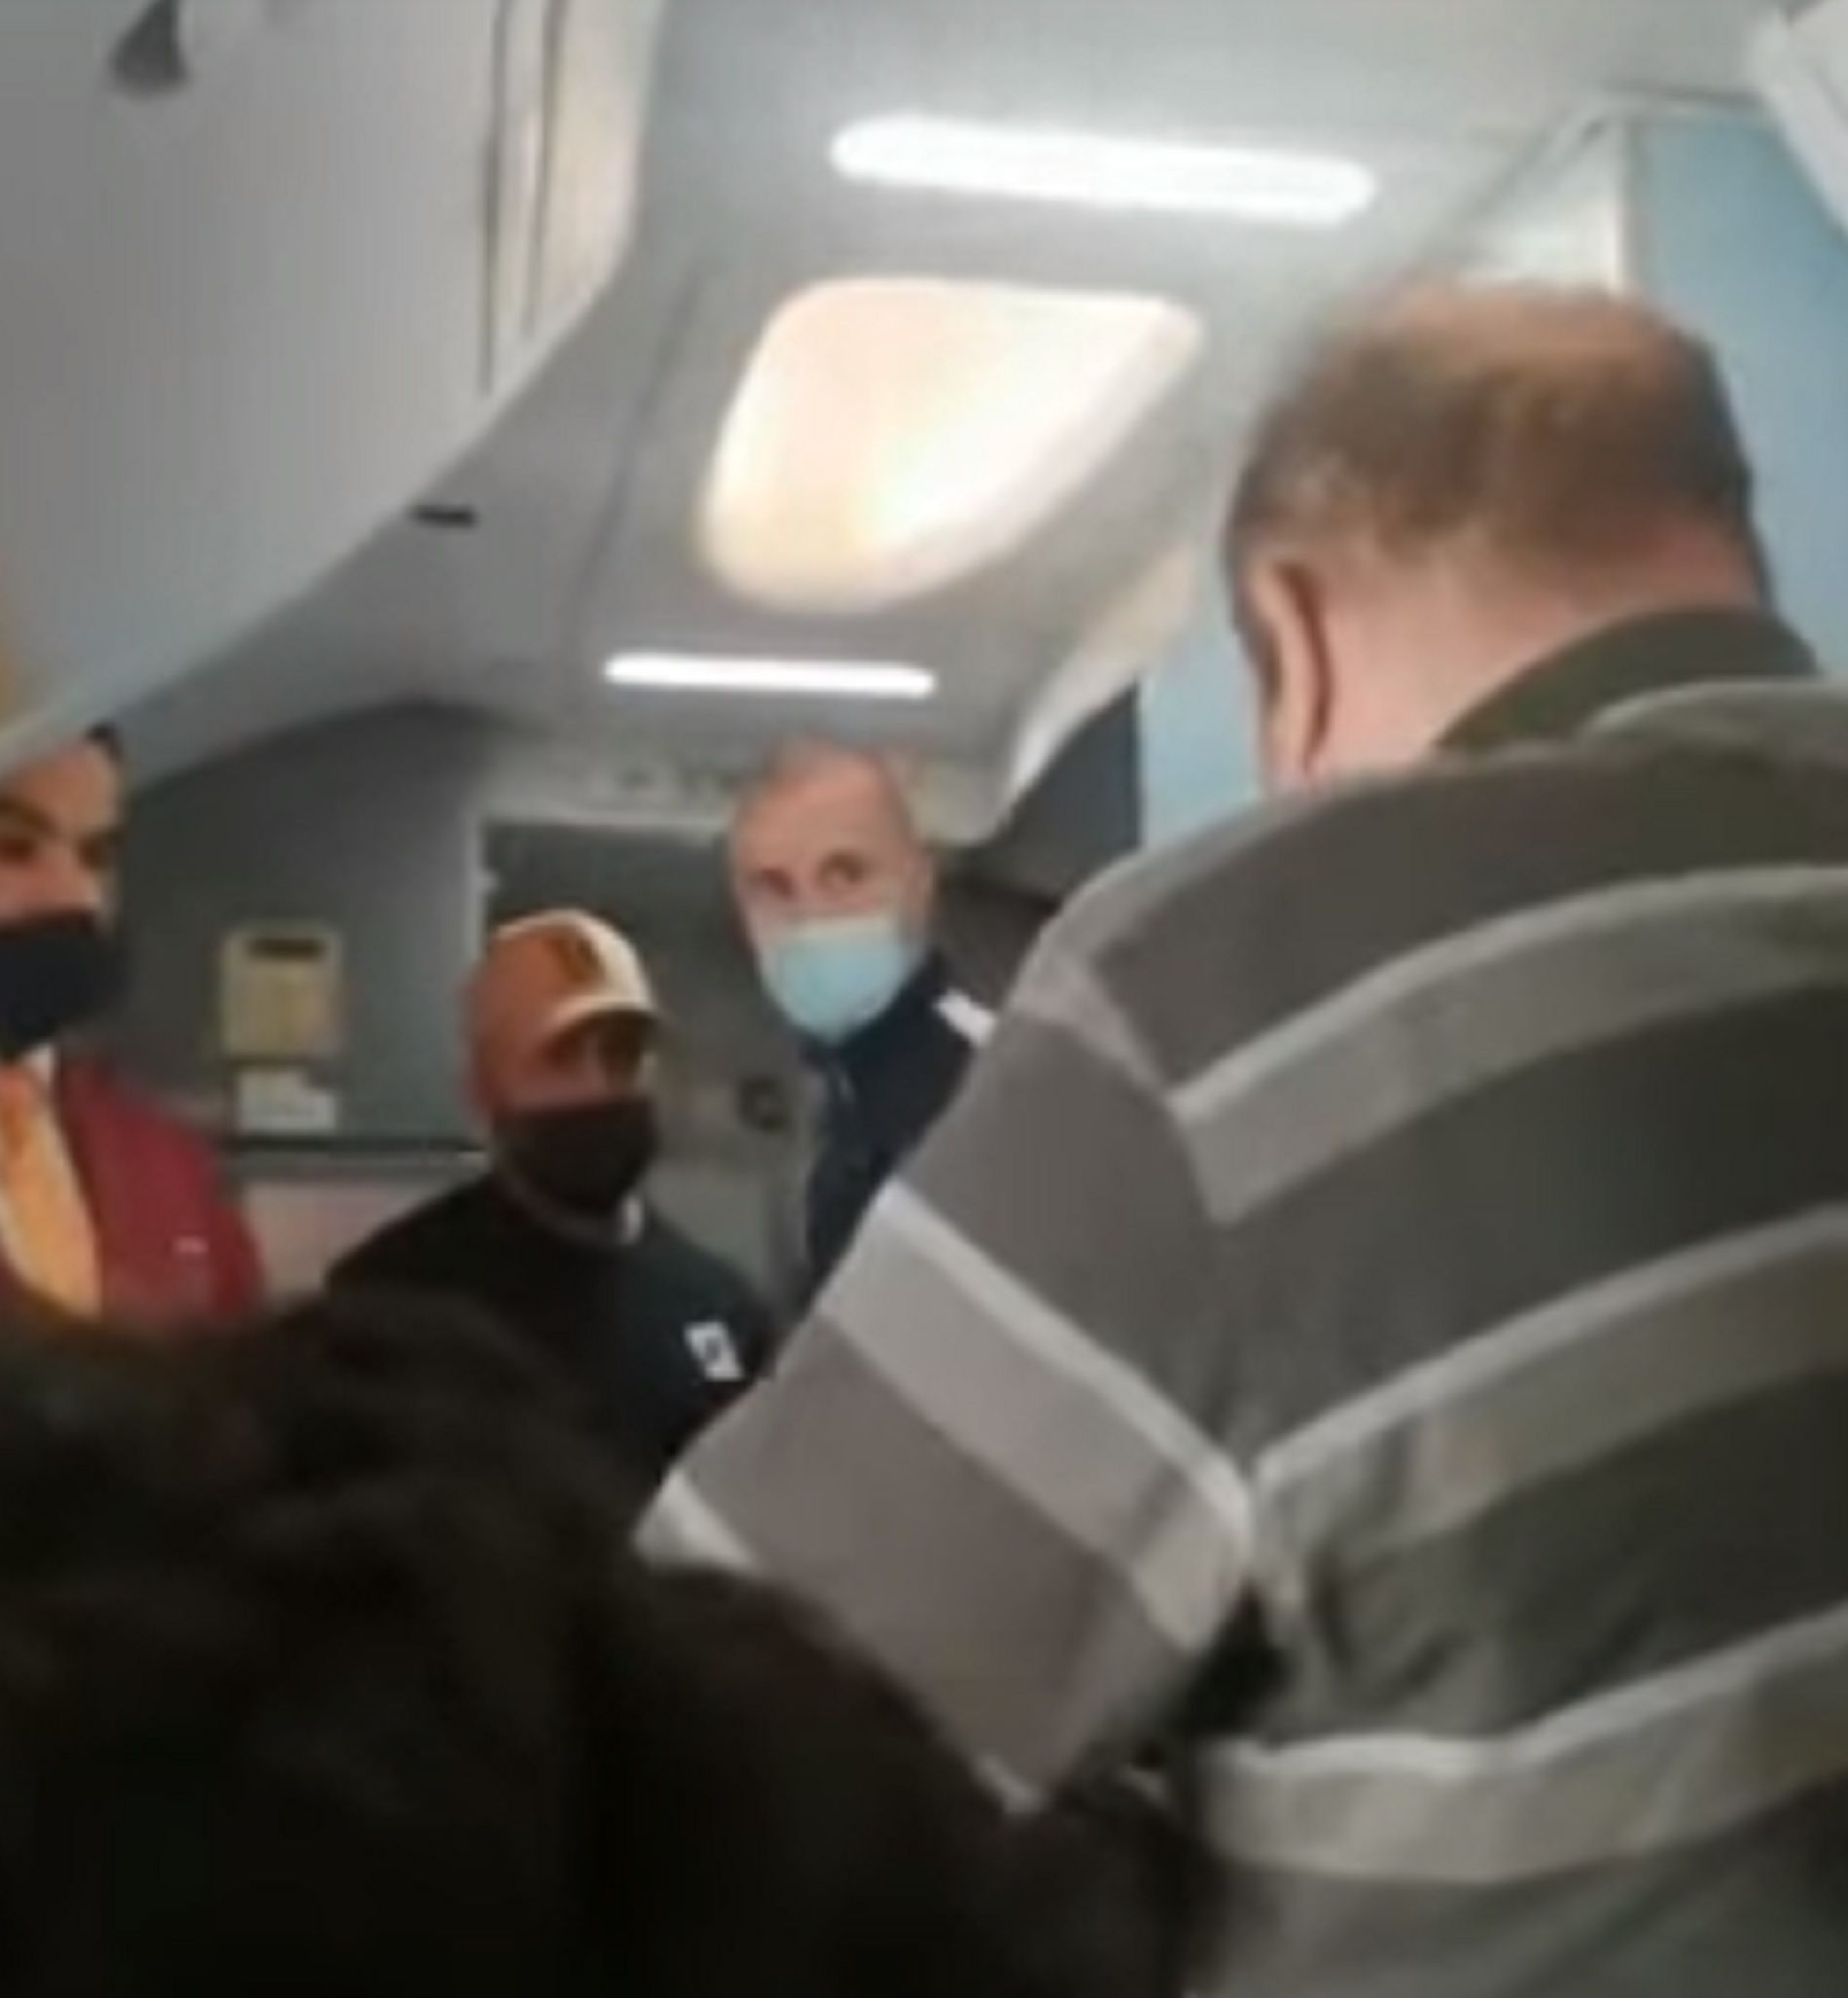 Vídeo incidente vuelo Sevilla Budapest / YouTube